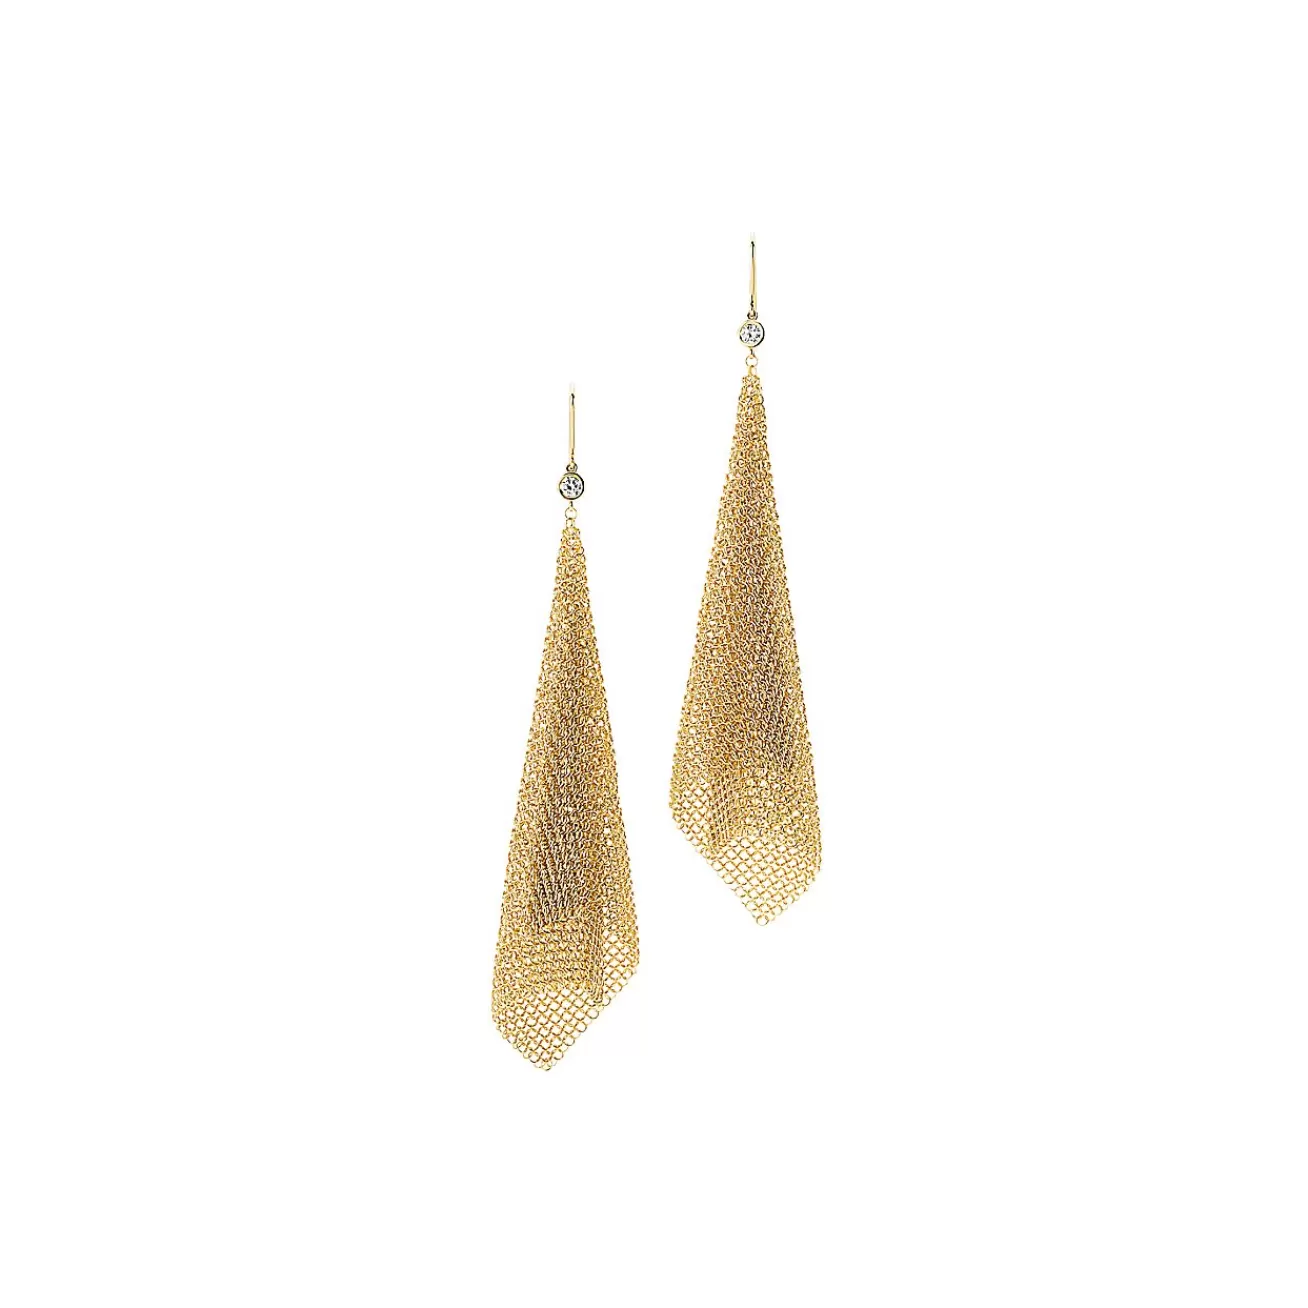 Tiffany & Co. Elsa Peretti® Mesh earrings in 18k gold with diamonds, large. | ^ Earrings | Gold Jewelry